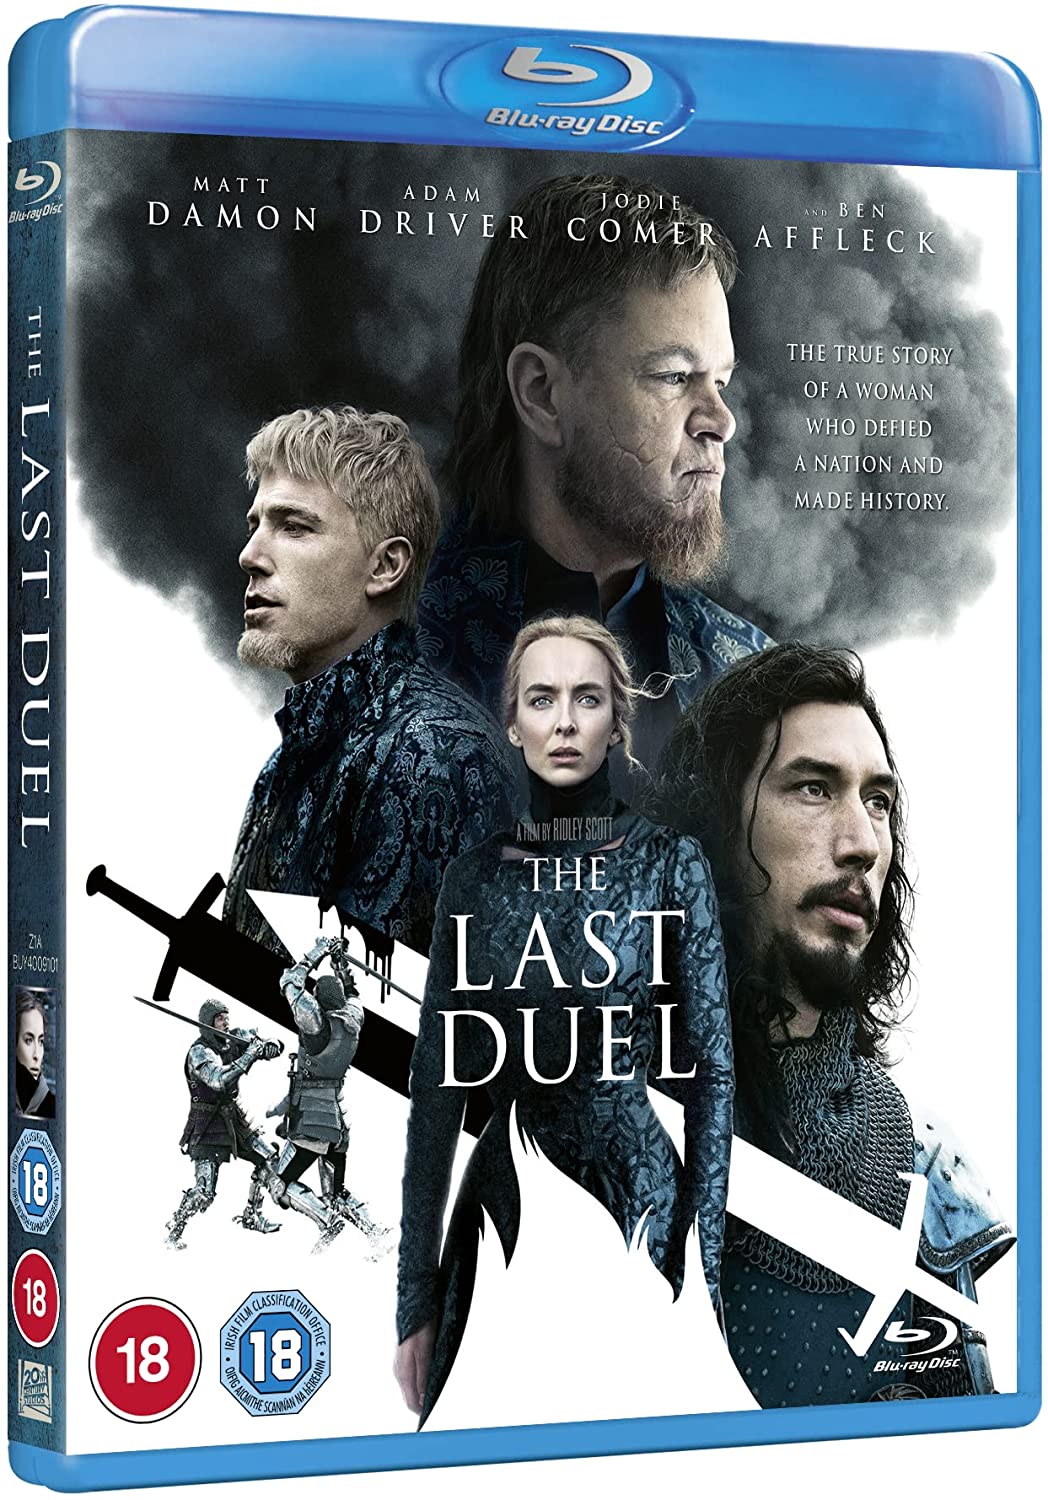 The Last Duel Blu-ray [2021] [Region Free] – Historisches Drama [Blu-ray]